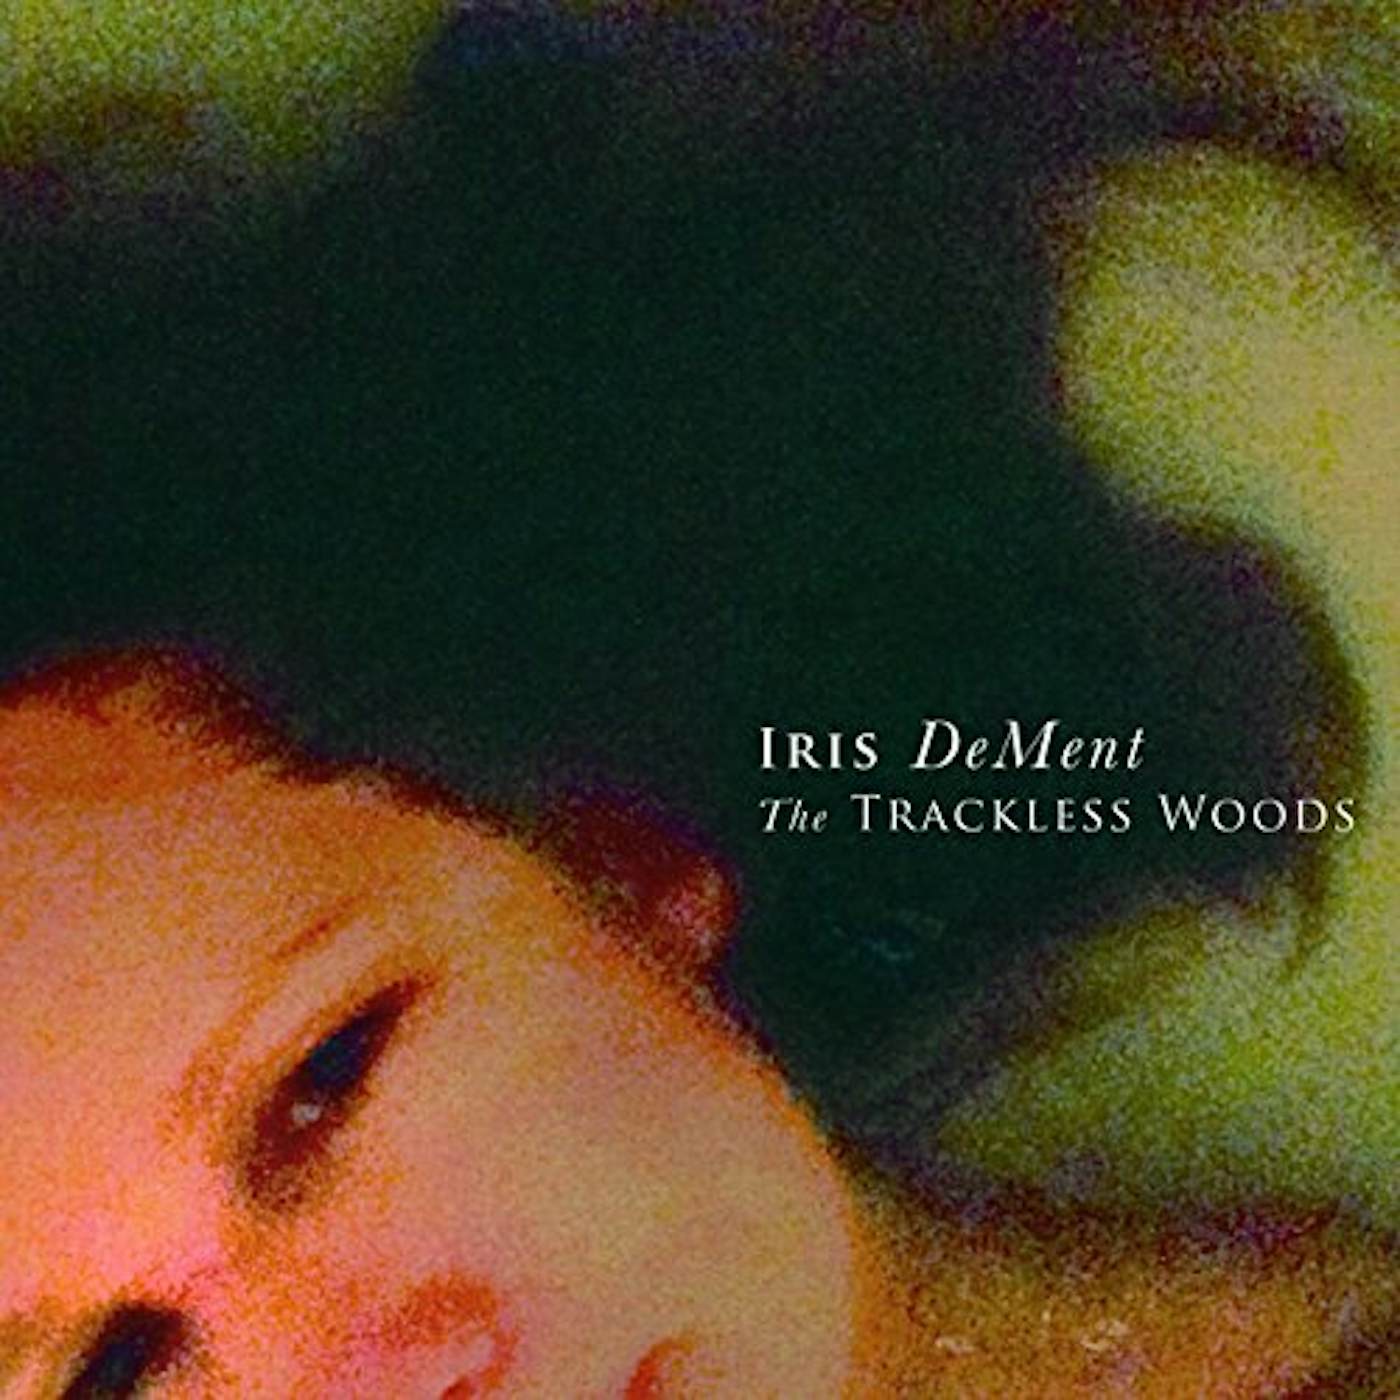 Iris DeMent TRACKLESS WOODS CD